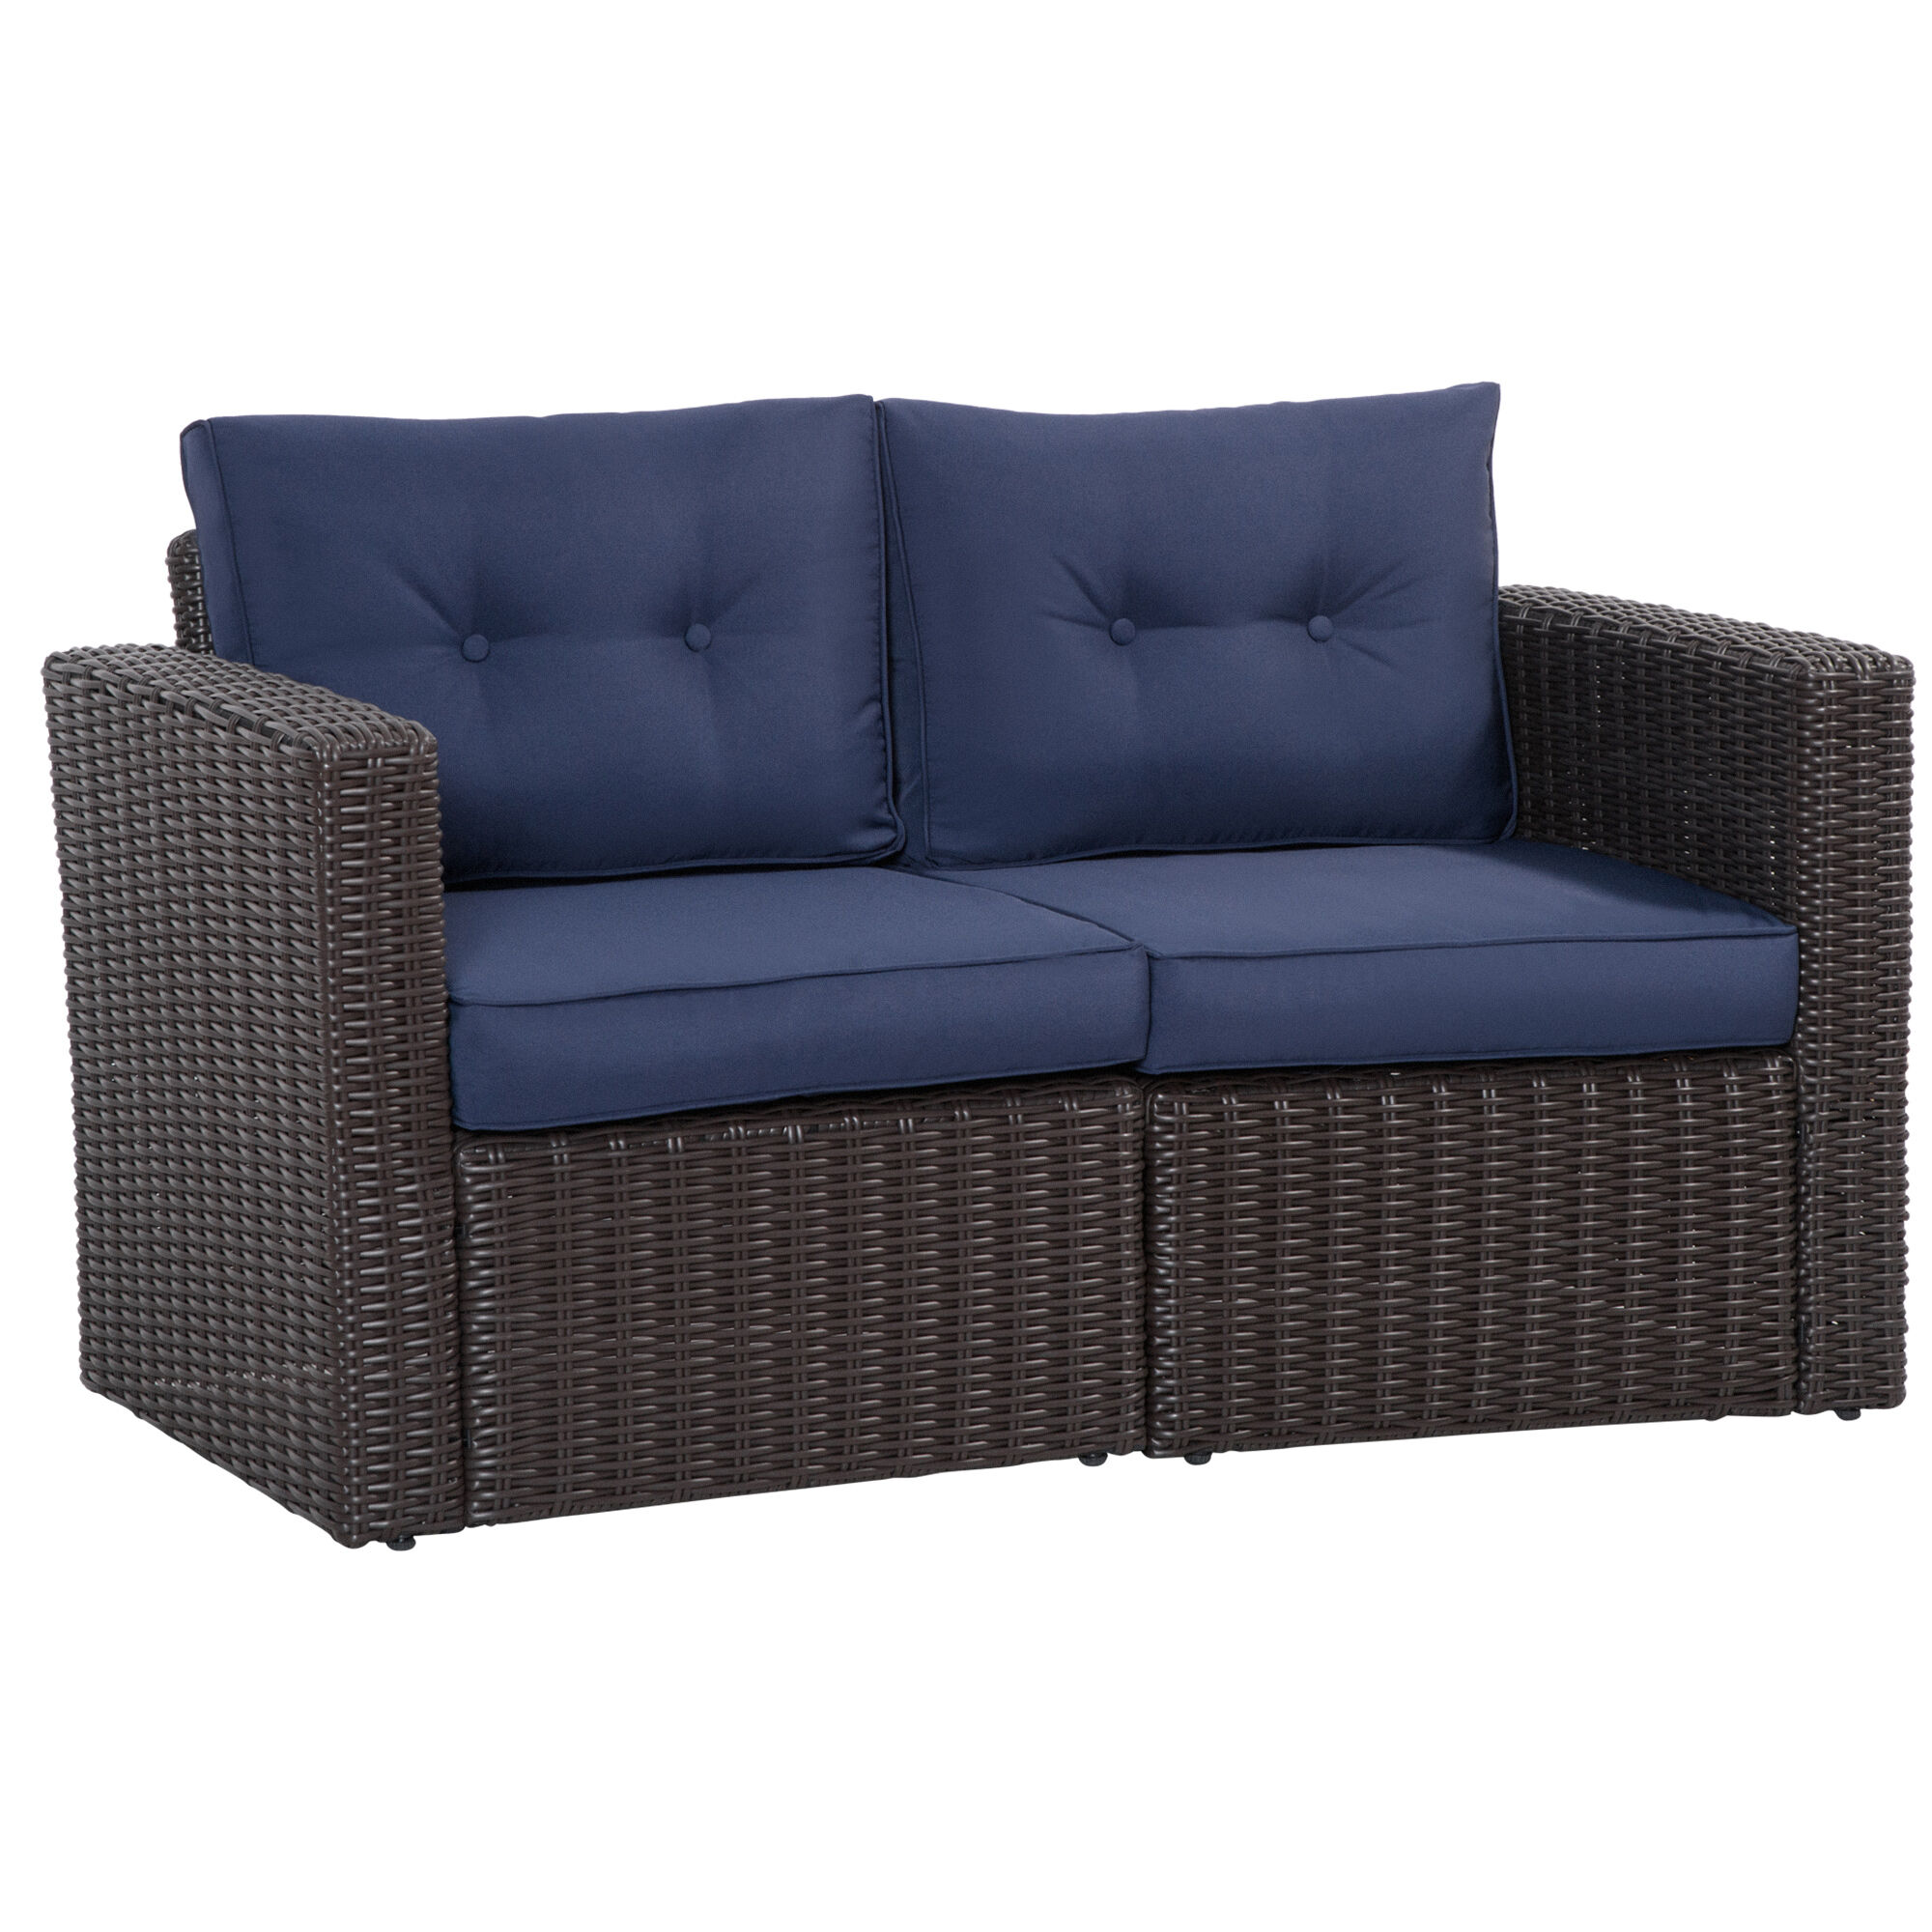 Outsunny 2PC Patio Wicker Corner Sofa Set Outdoor PE Rattan Furniture Curved Armrests Cushions Dark Blue   Aosom.com